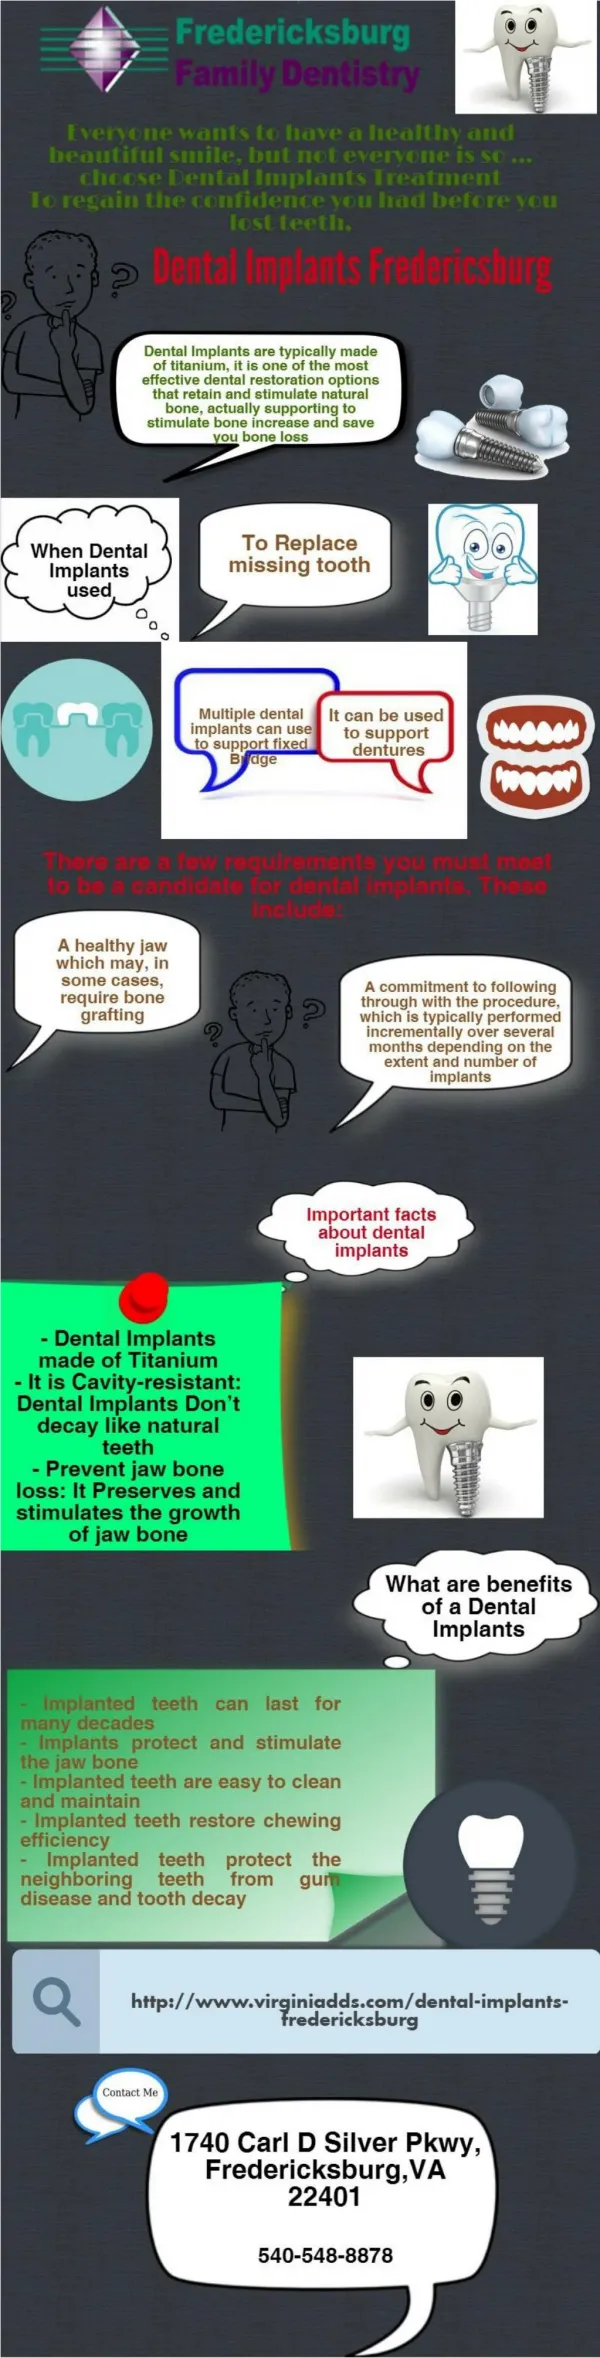 Dental Implants Fredericksburg, Dental Implants in Fredericksburg VA